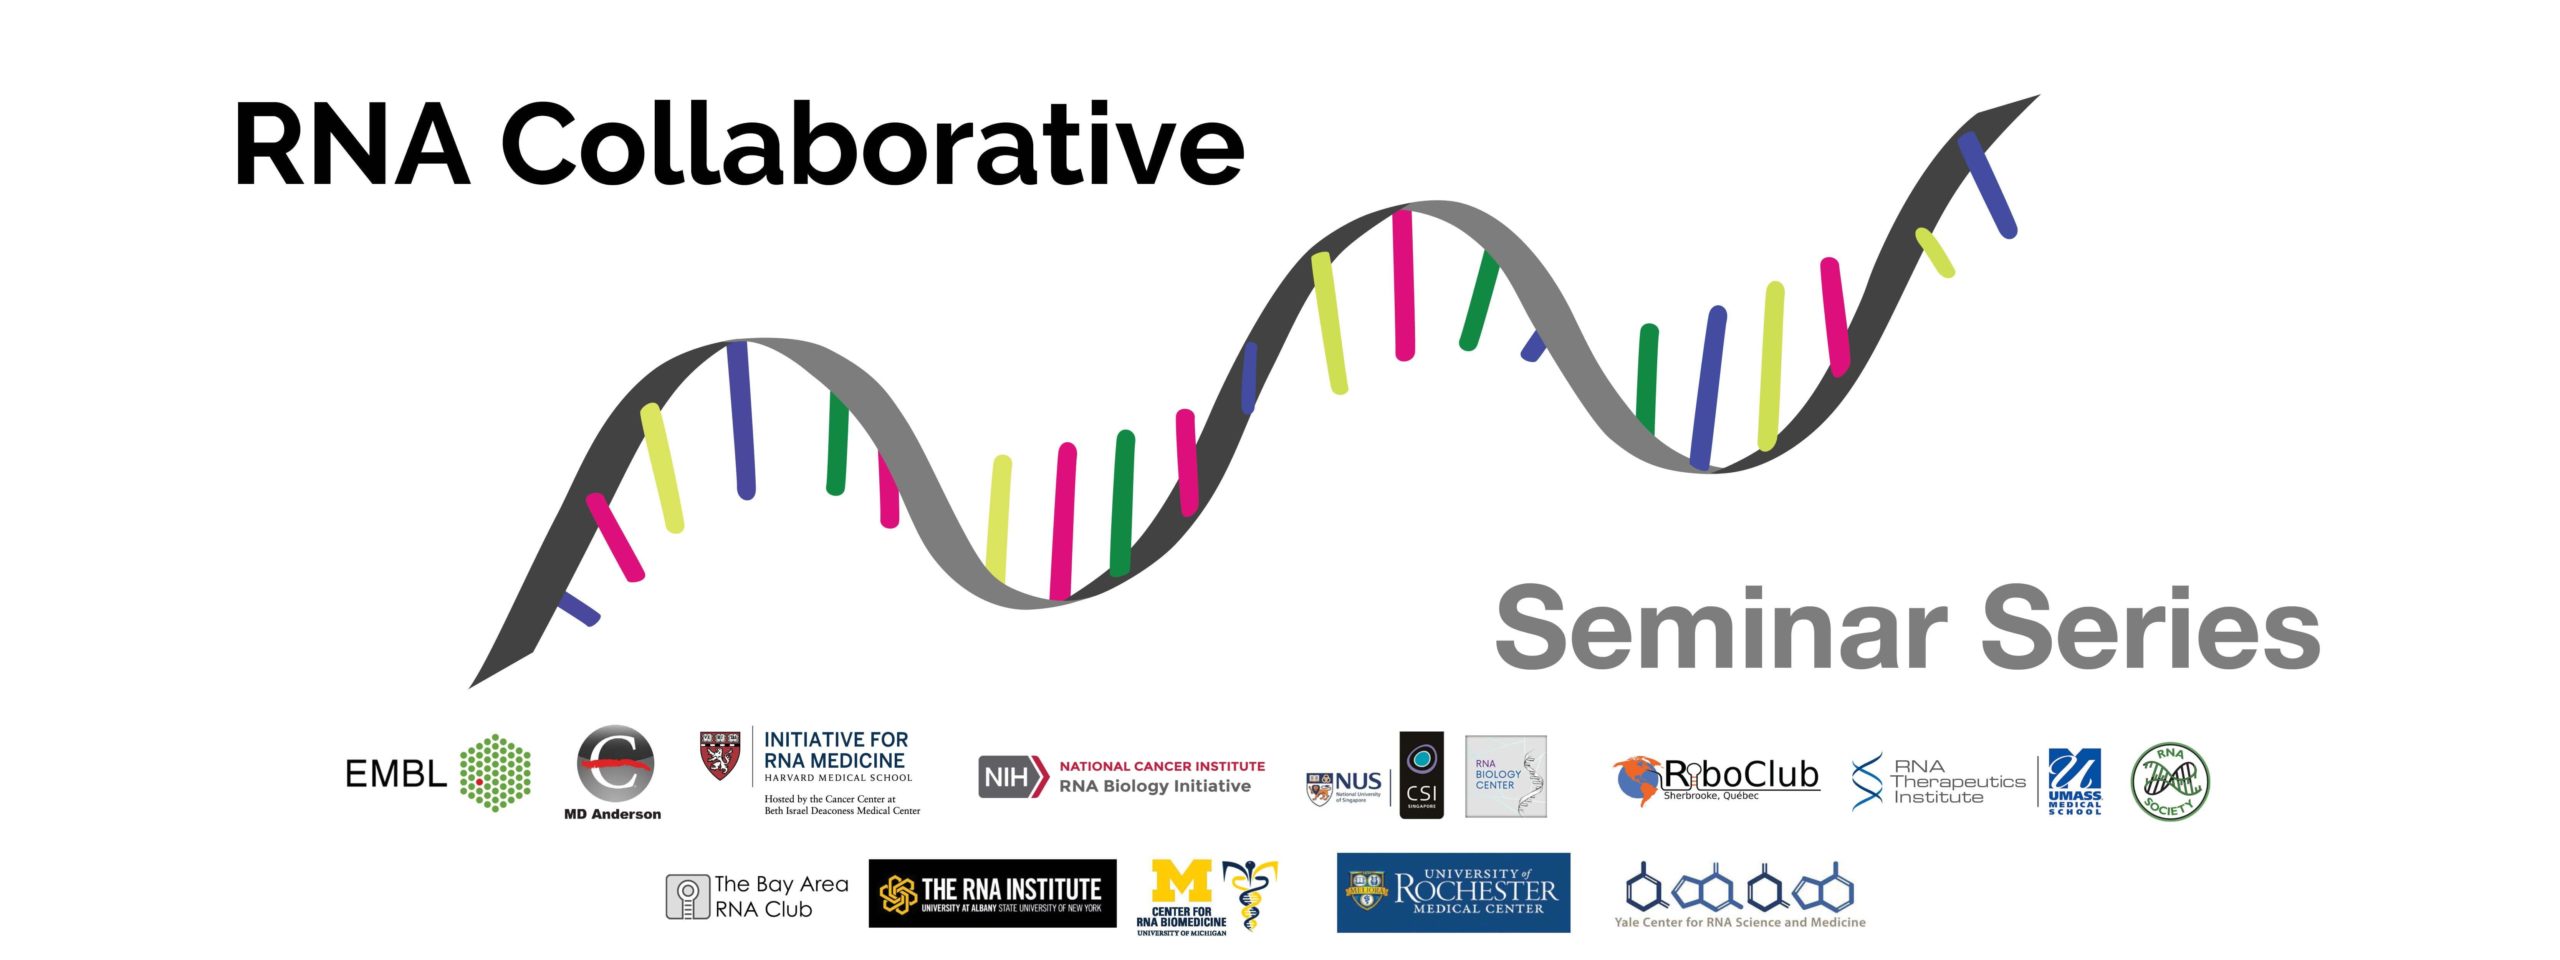 RNA Collaborative Seminar Series 1